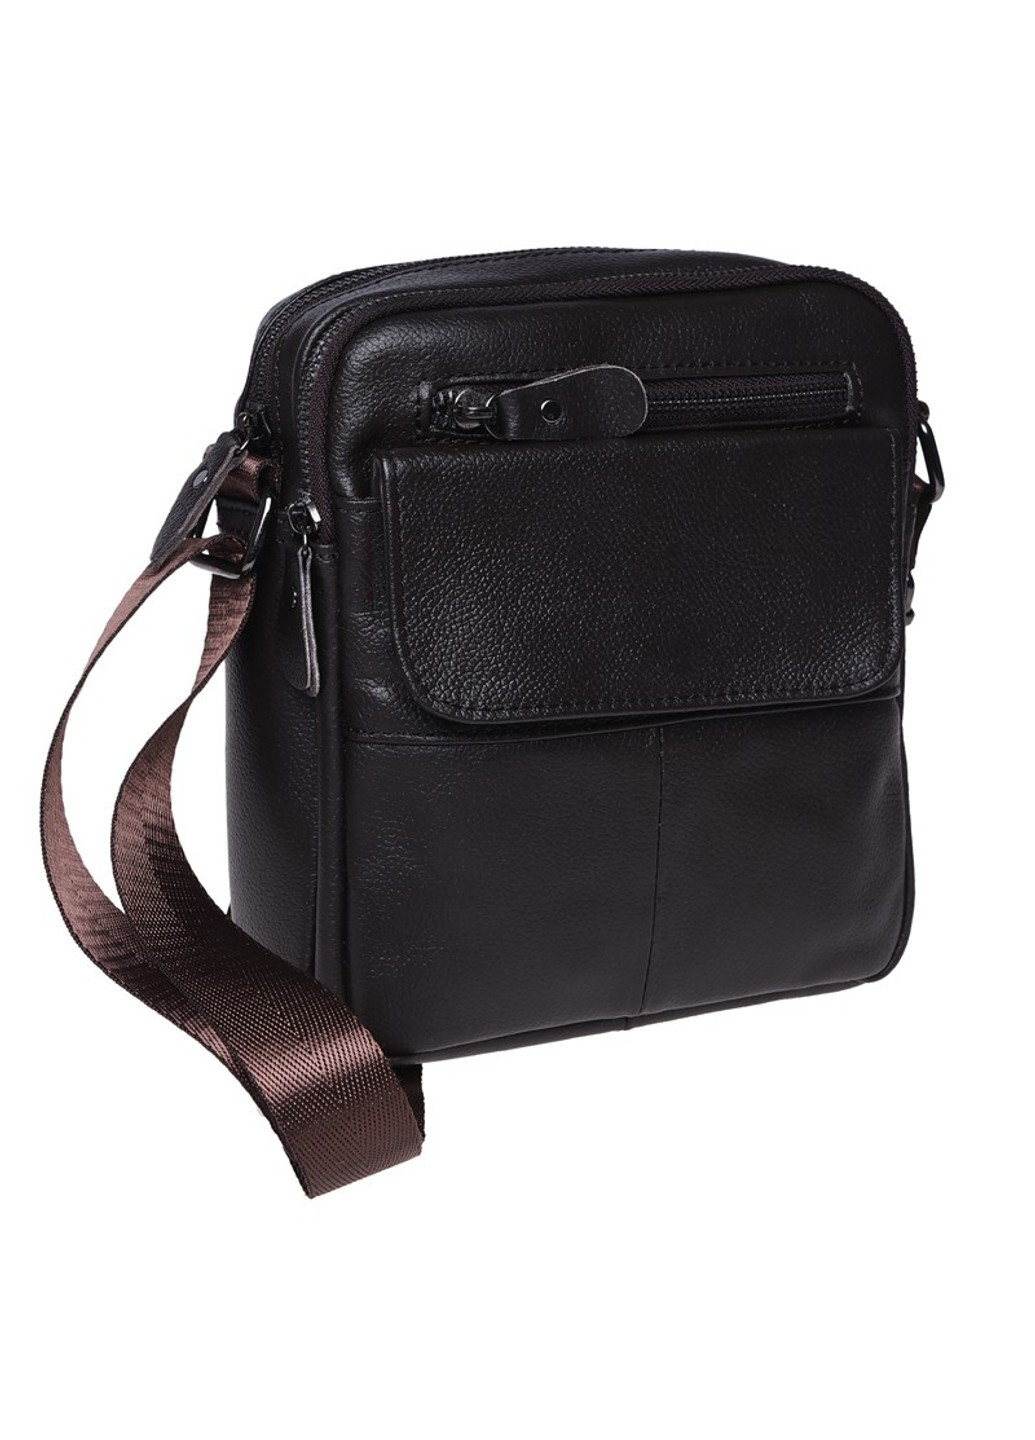 Мужская кожаная сумка коричневого цвета 100316-brown Borsa Leather (266143281)